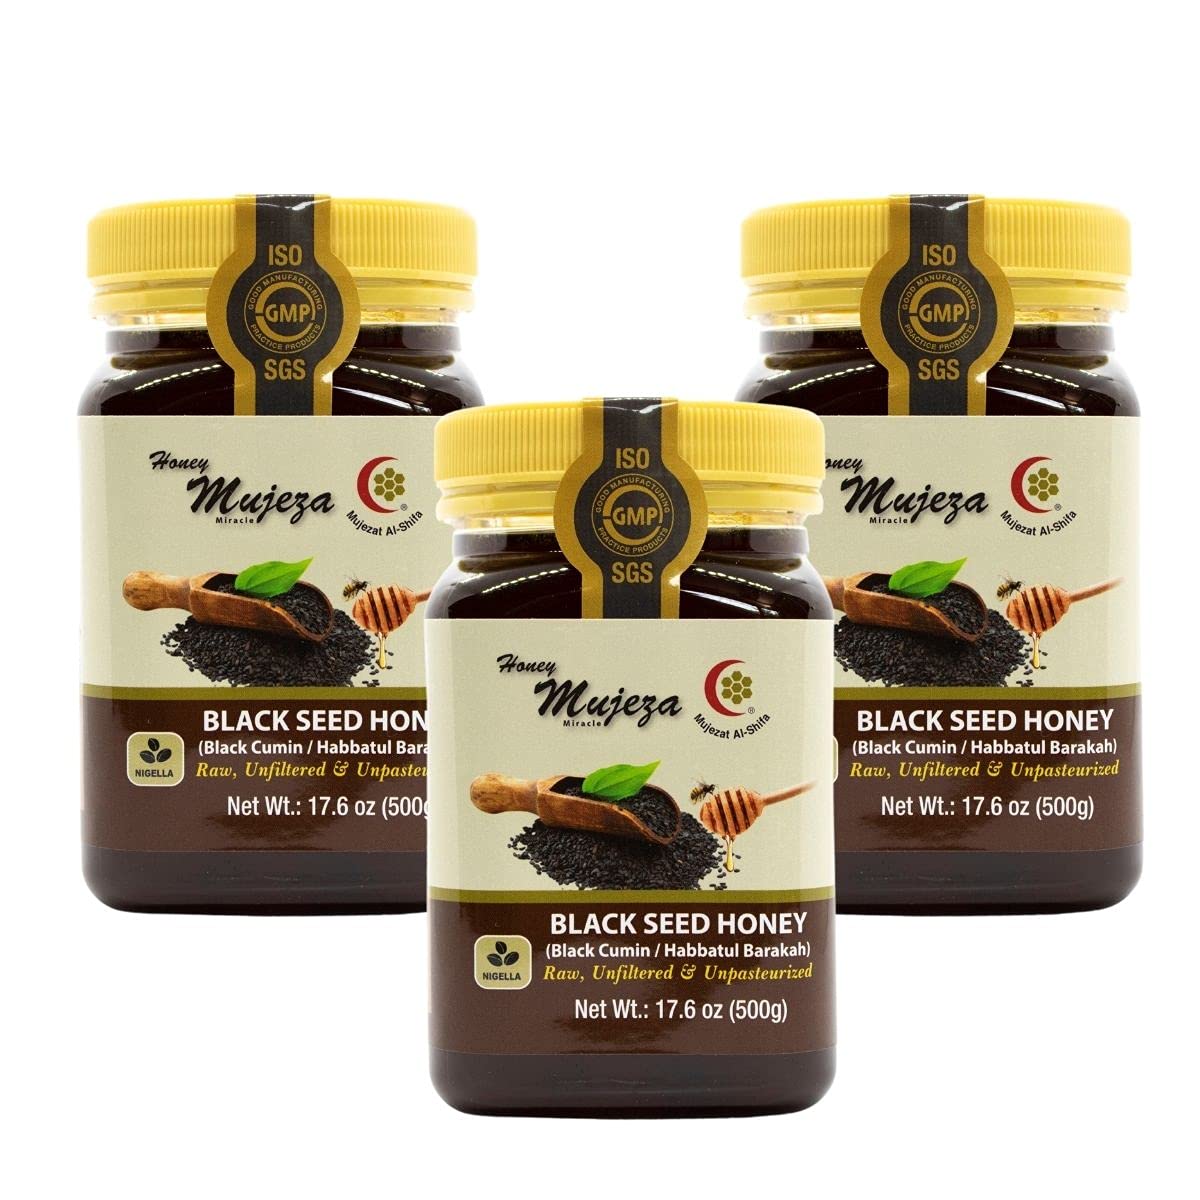 PACK OF 3 Mujeza Black Seed Honey - Not Mixed with Oil or Powder - Gluten Free - Non GMO - Organic Honey - Immune Booster - 100% Natural Raw Honey 500g/17.6oz - Mujezat Al-Shifa